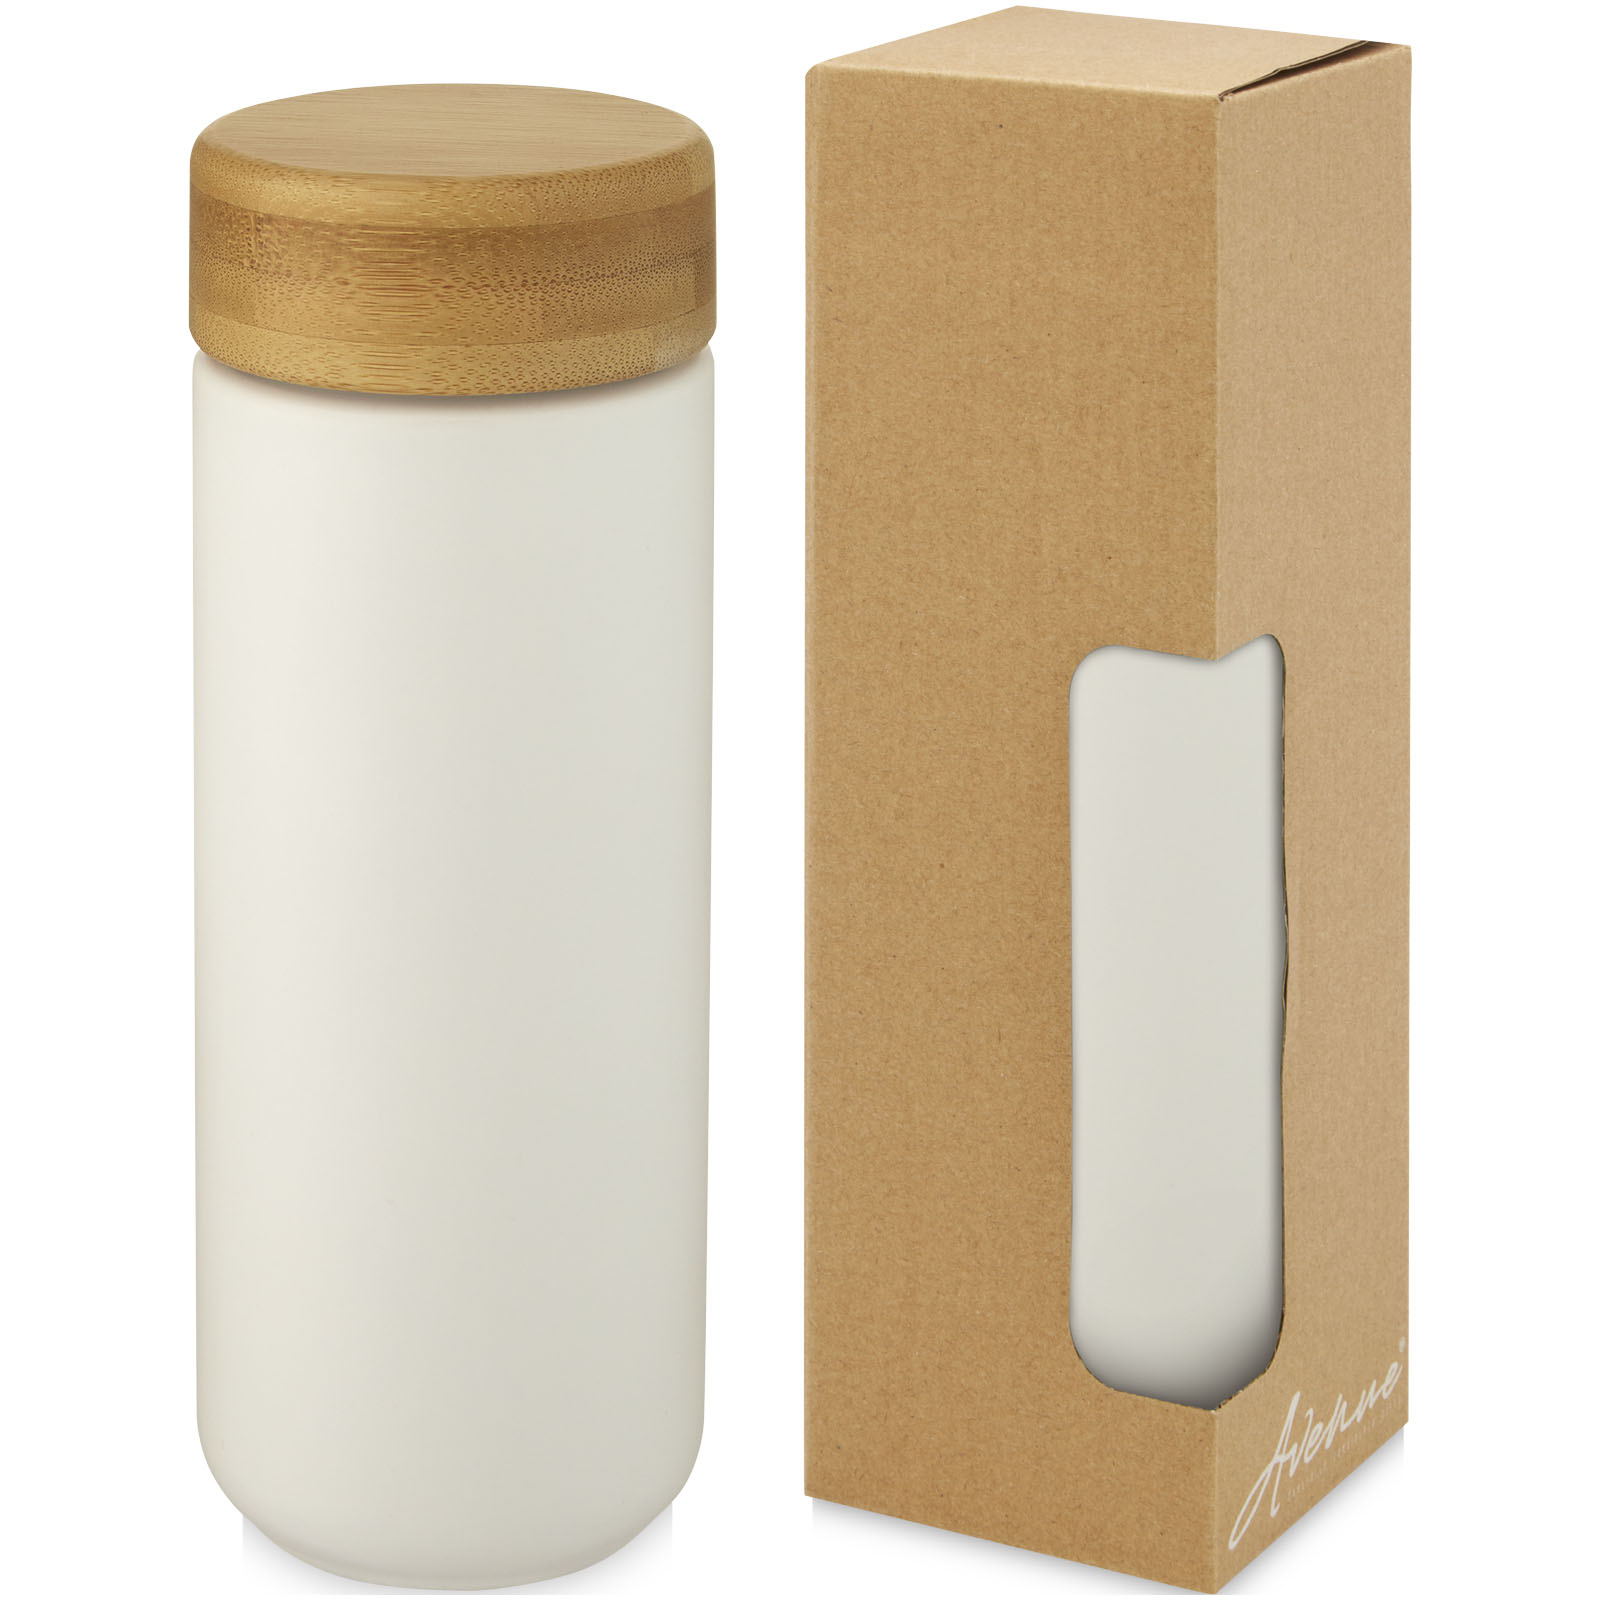 Travel mugs - Lumi 300 ml ceramic tumbler with bamboo lid